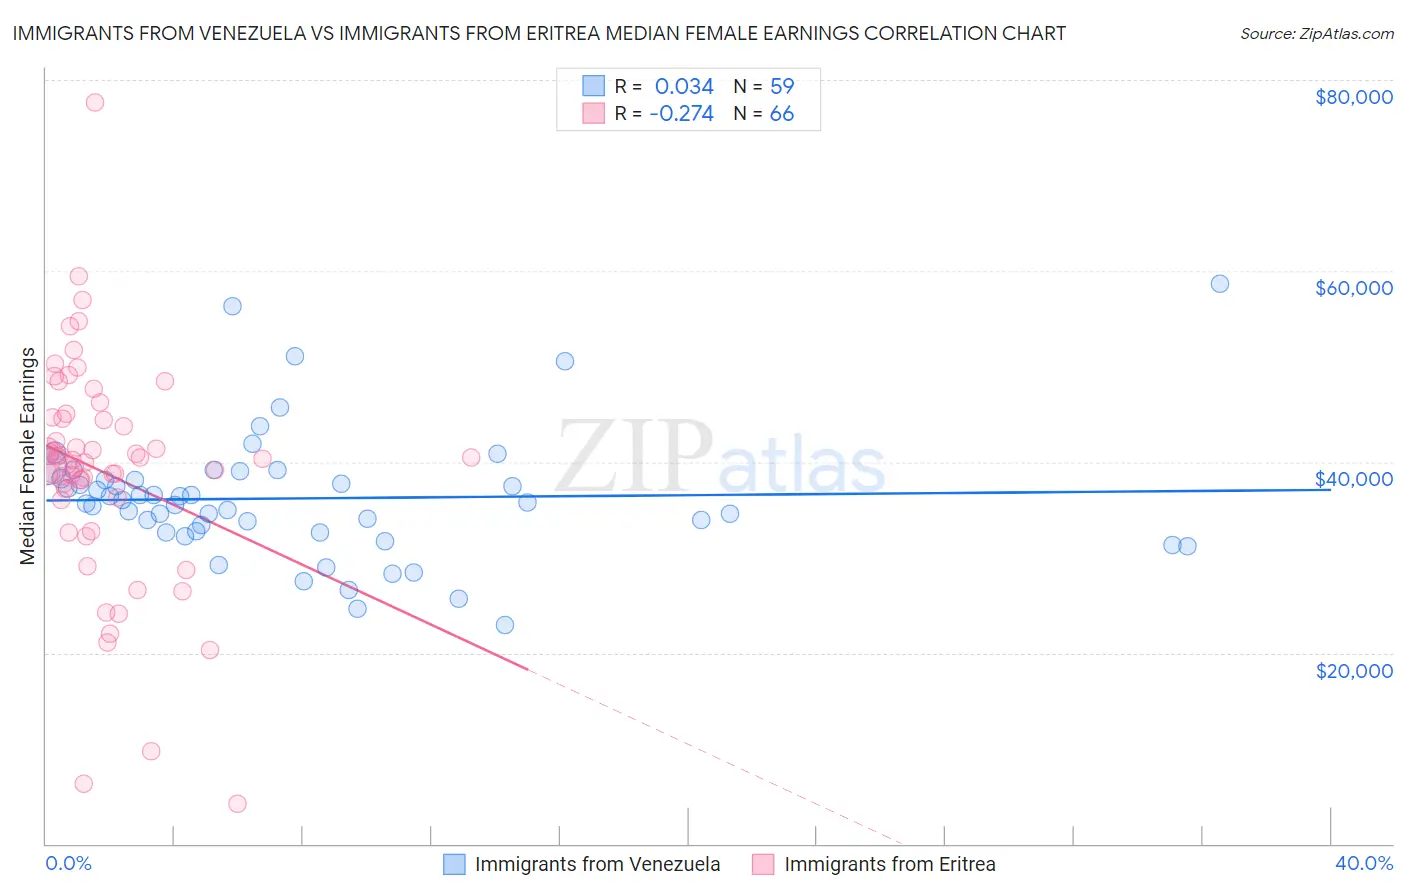 Immigrants from Venezuela vs Immigrants from Eritrea Median Female Earnings